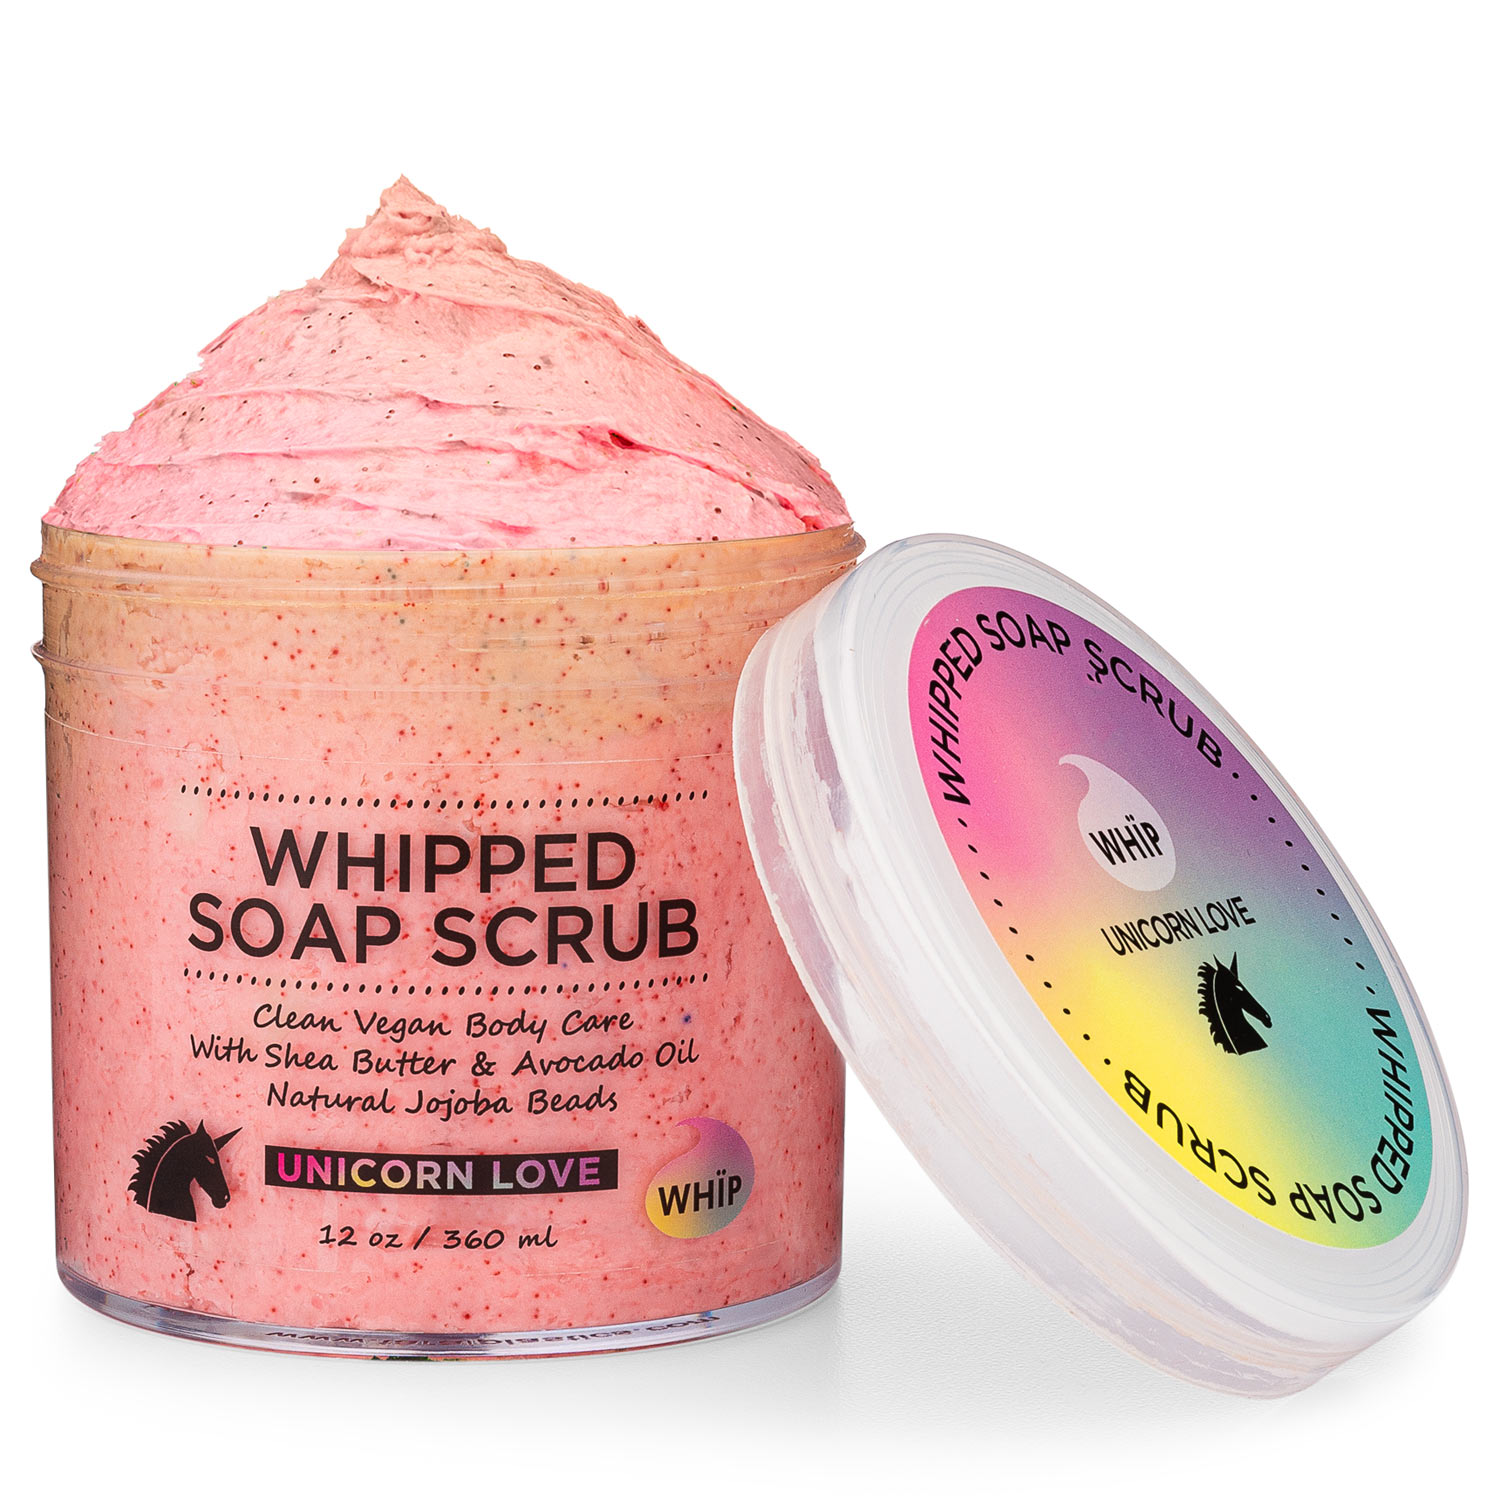 Whipped Soap Scrub - Unicorn Love WHÏP Image